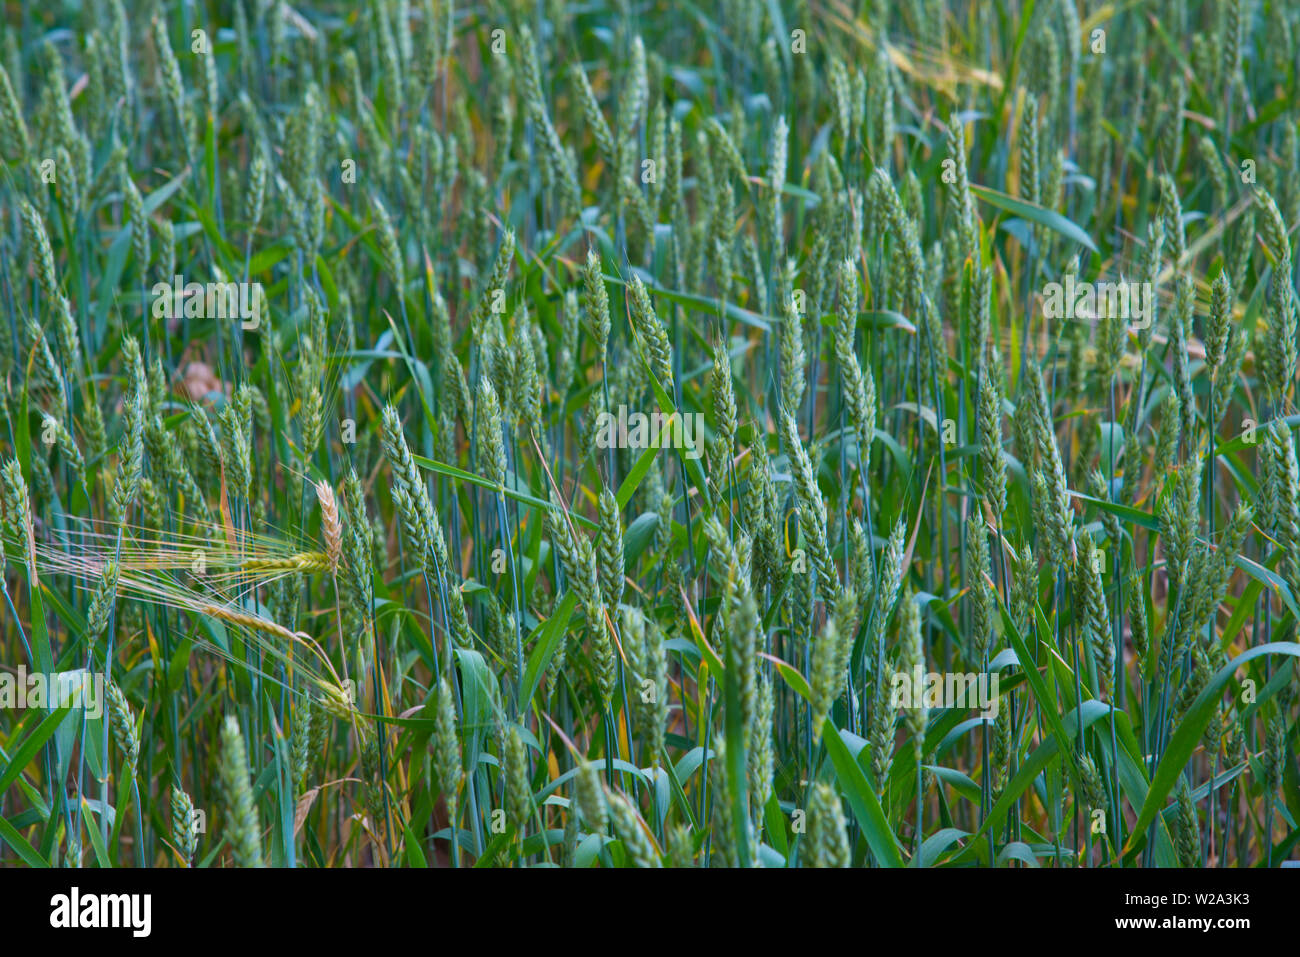 Grüne Weizenähren. Stockfoto